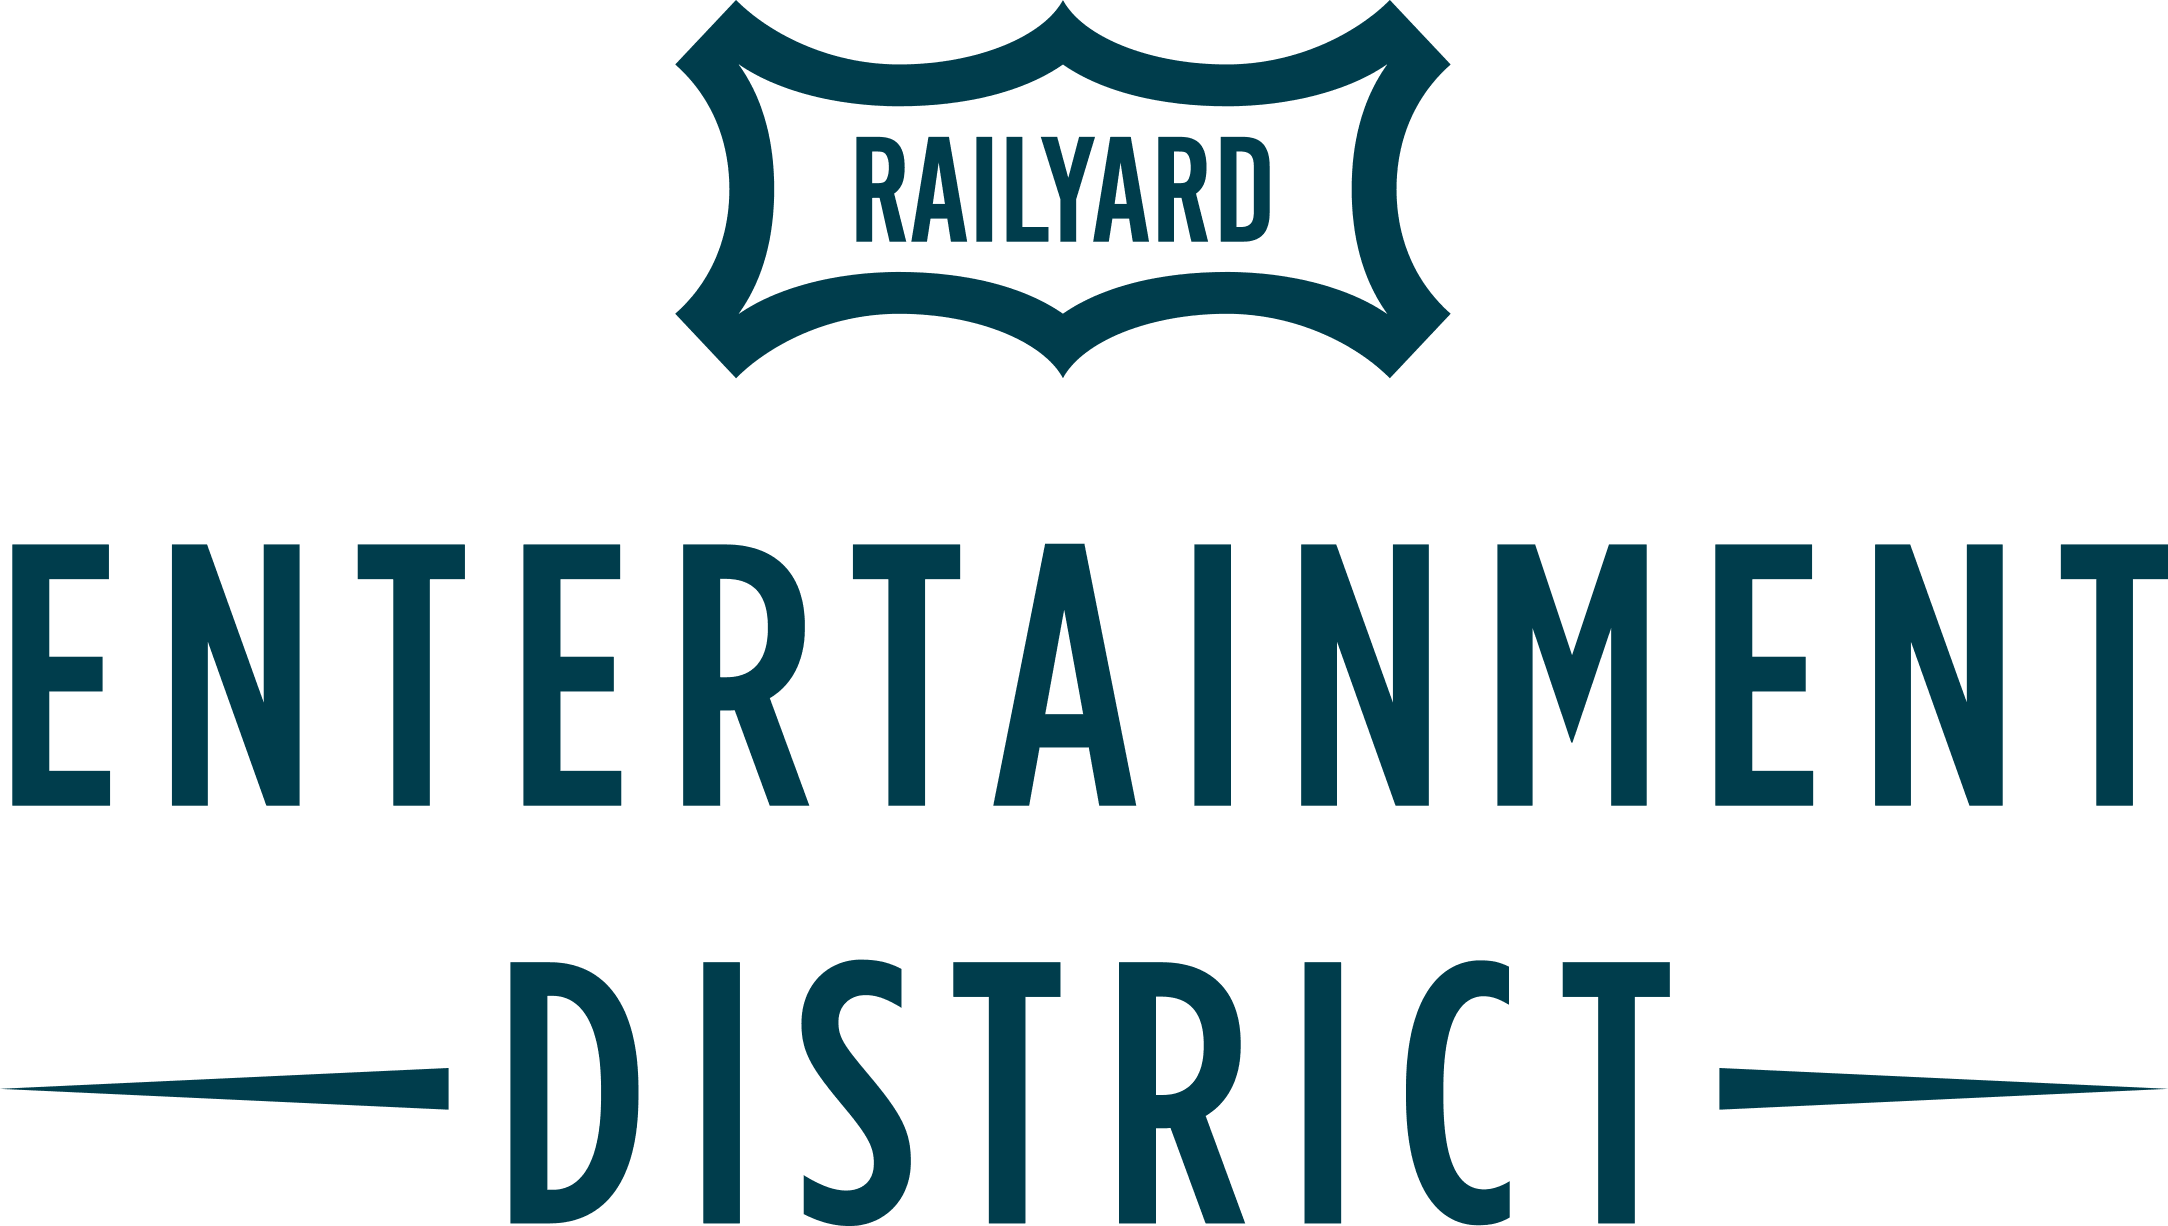 Railyard Entertainment District logo